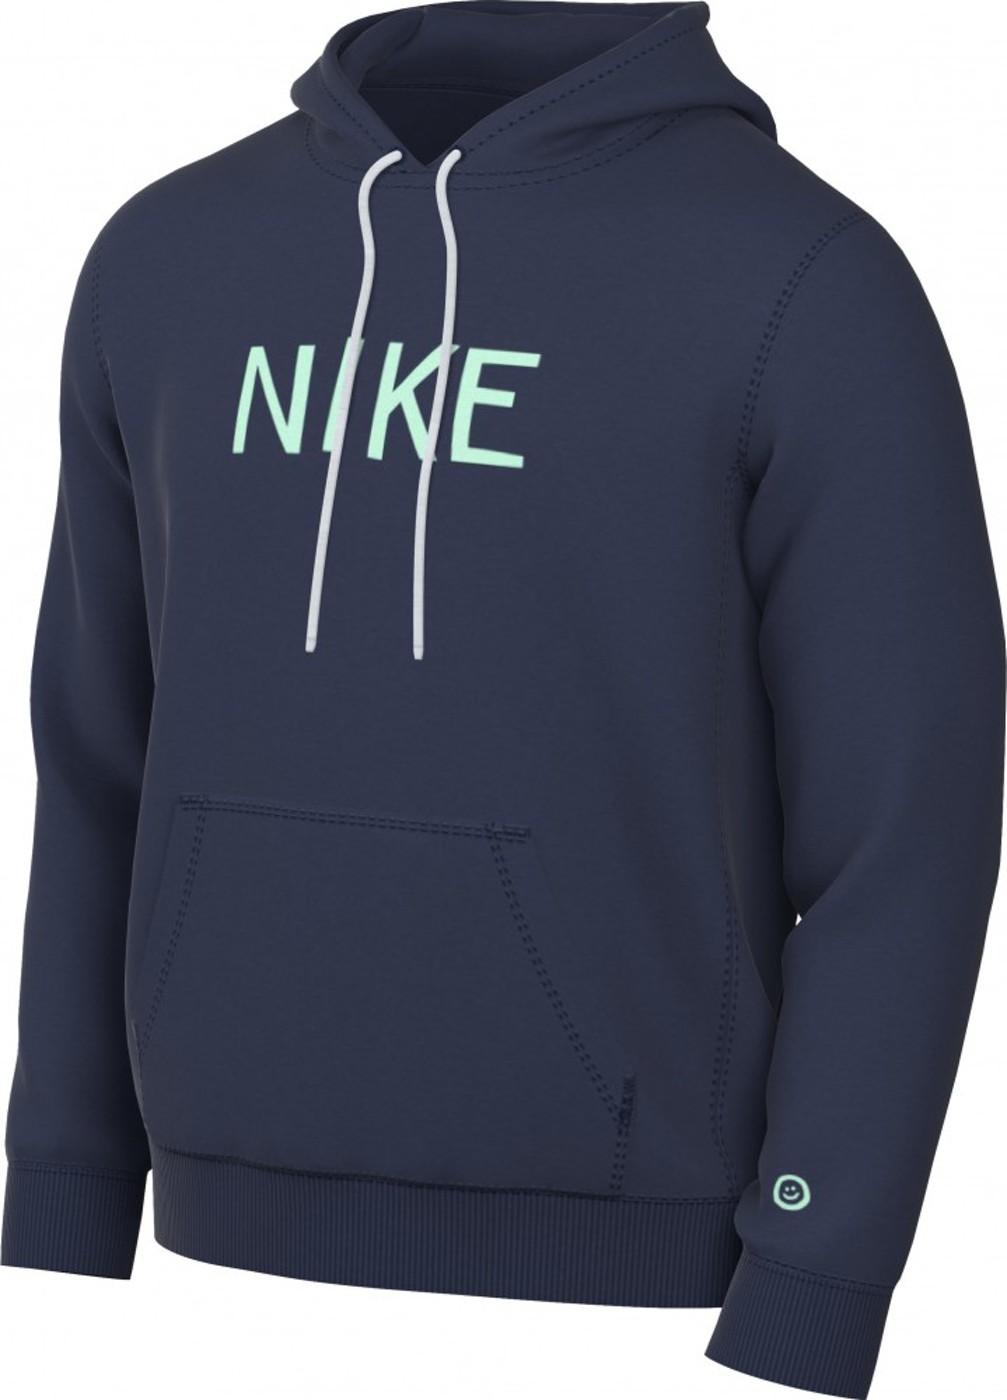 Nike Sportswear Brushed - Herren